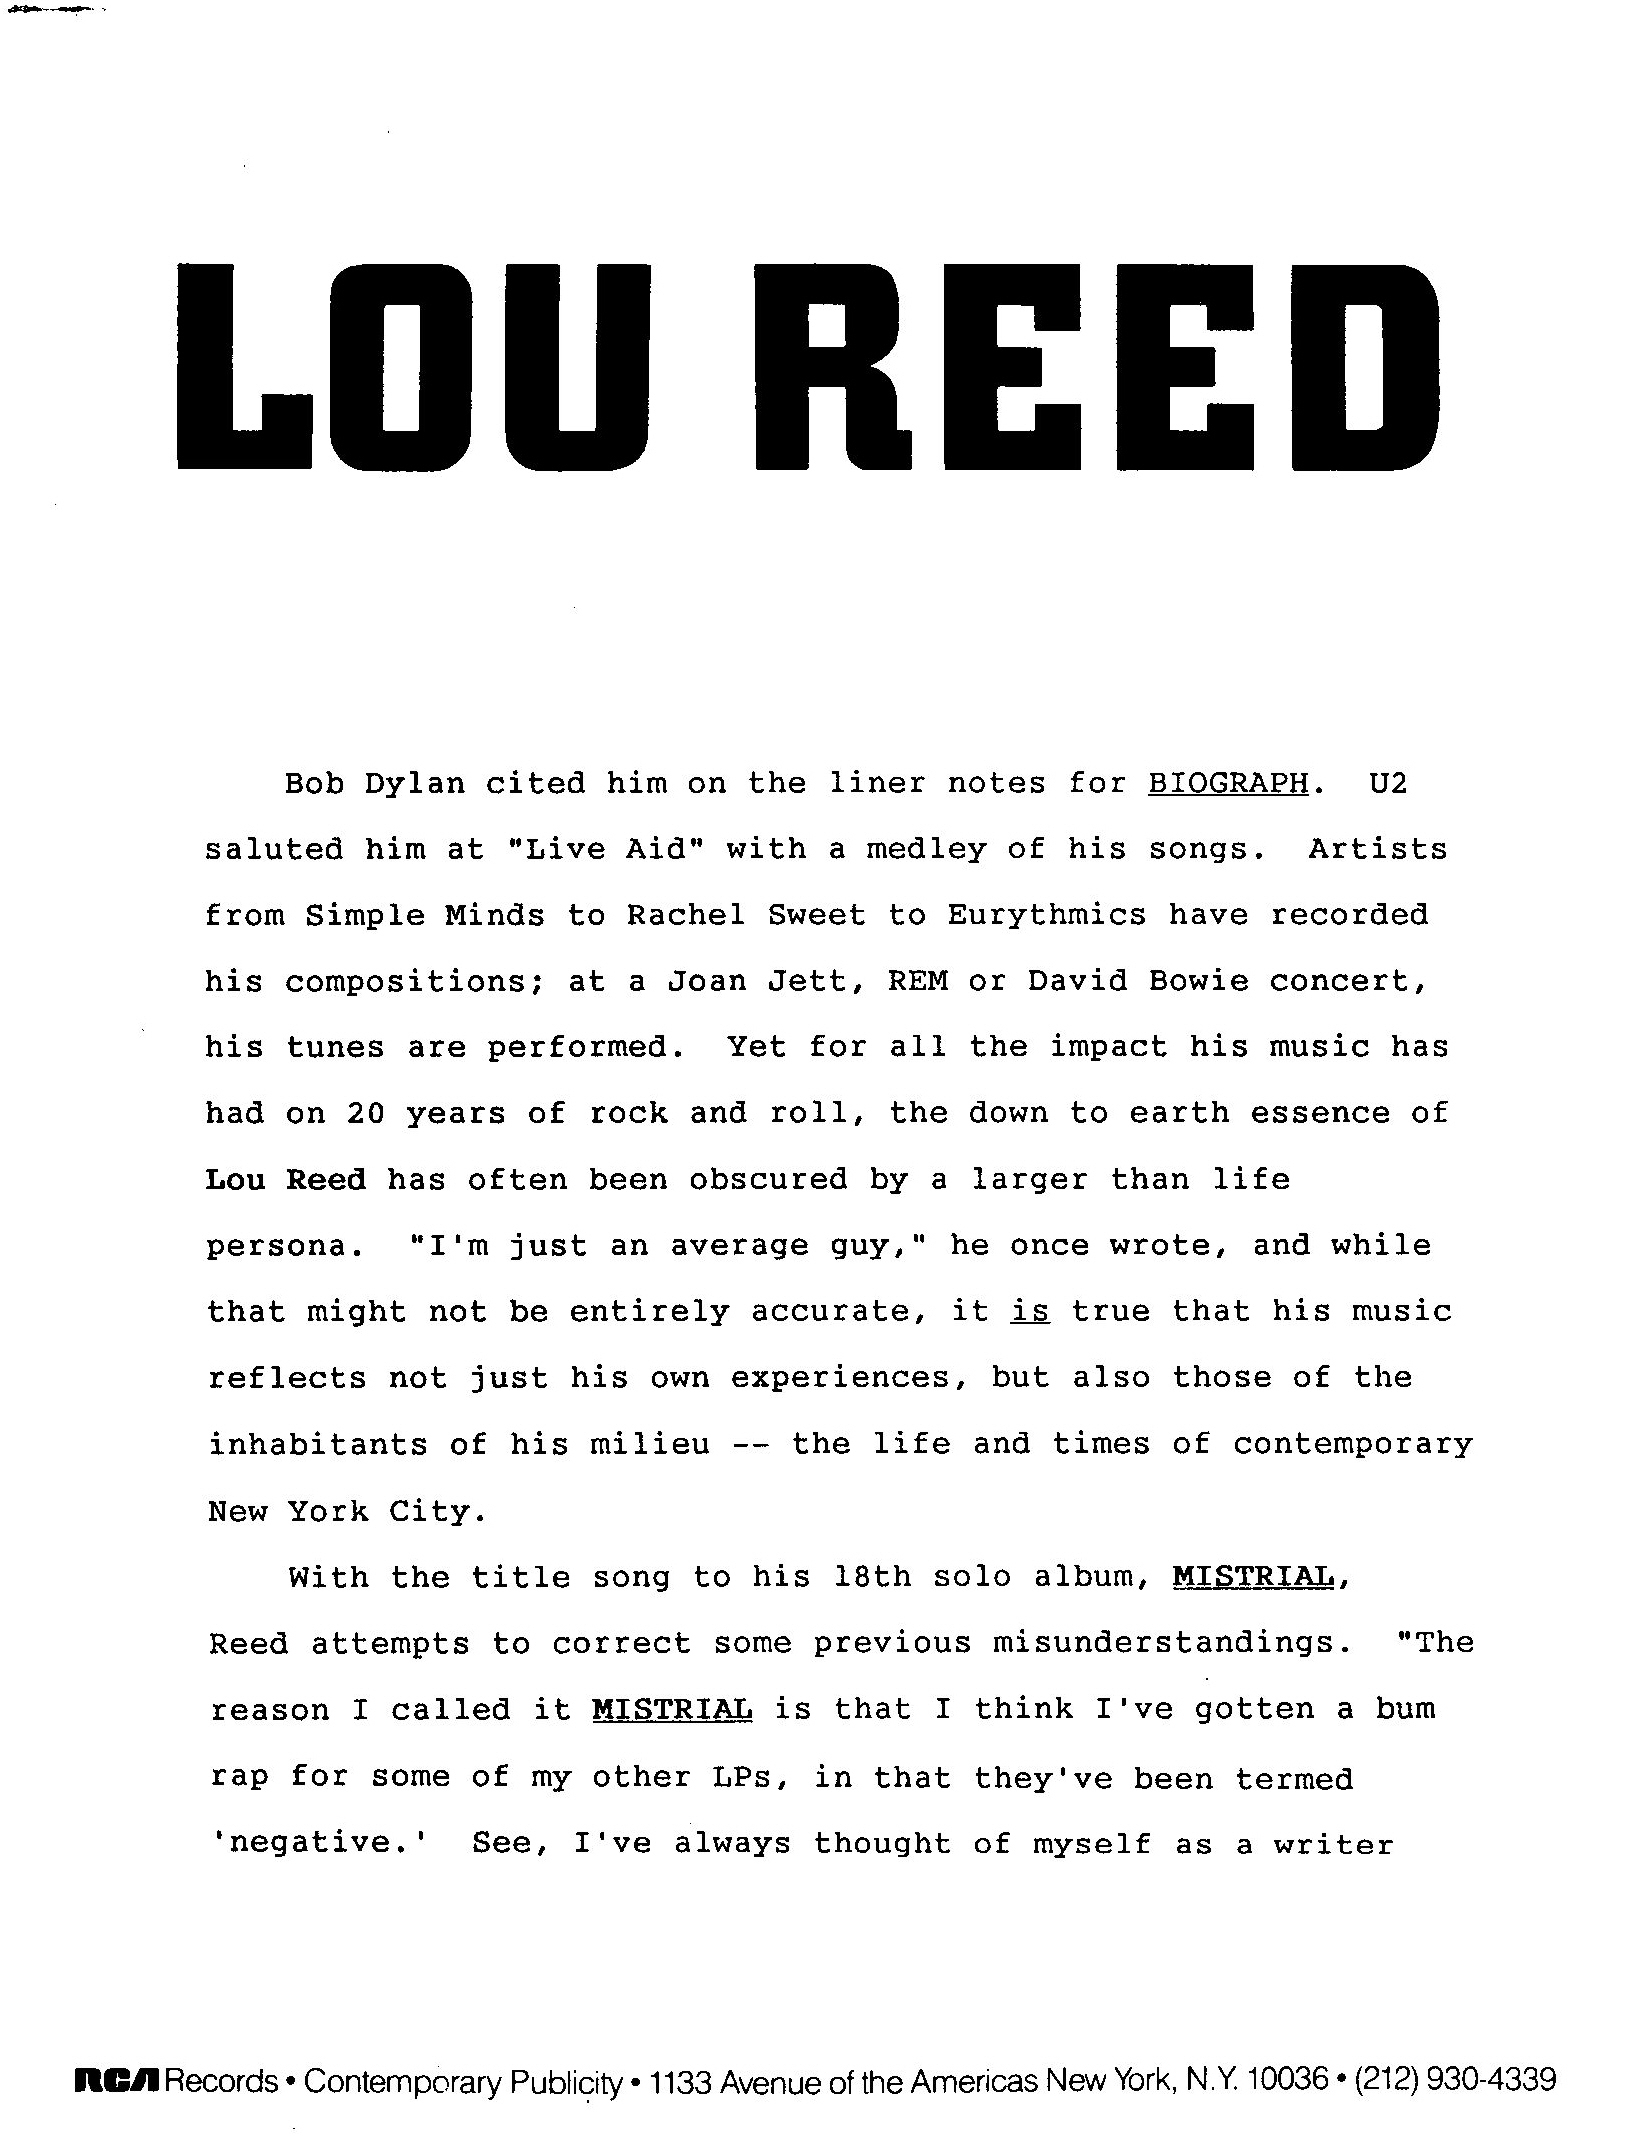 LouReed1986RadioInterviews (13).jpg